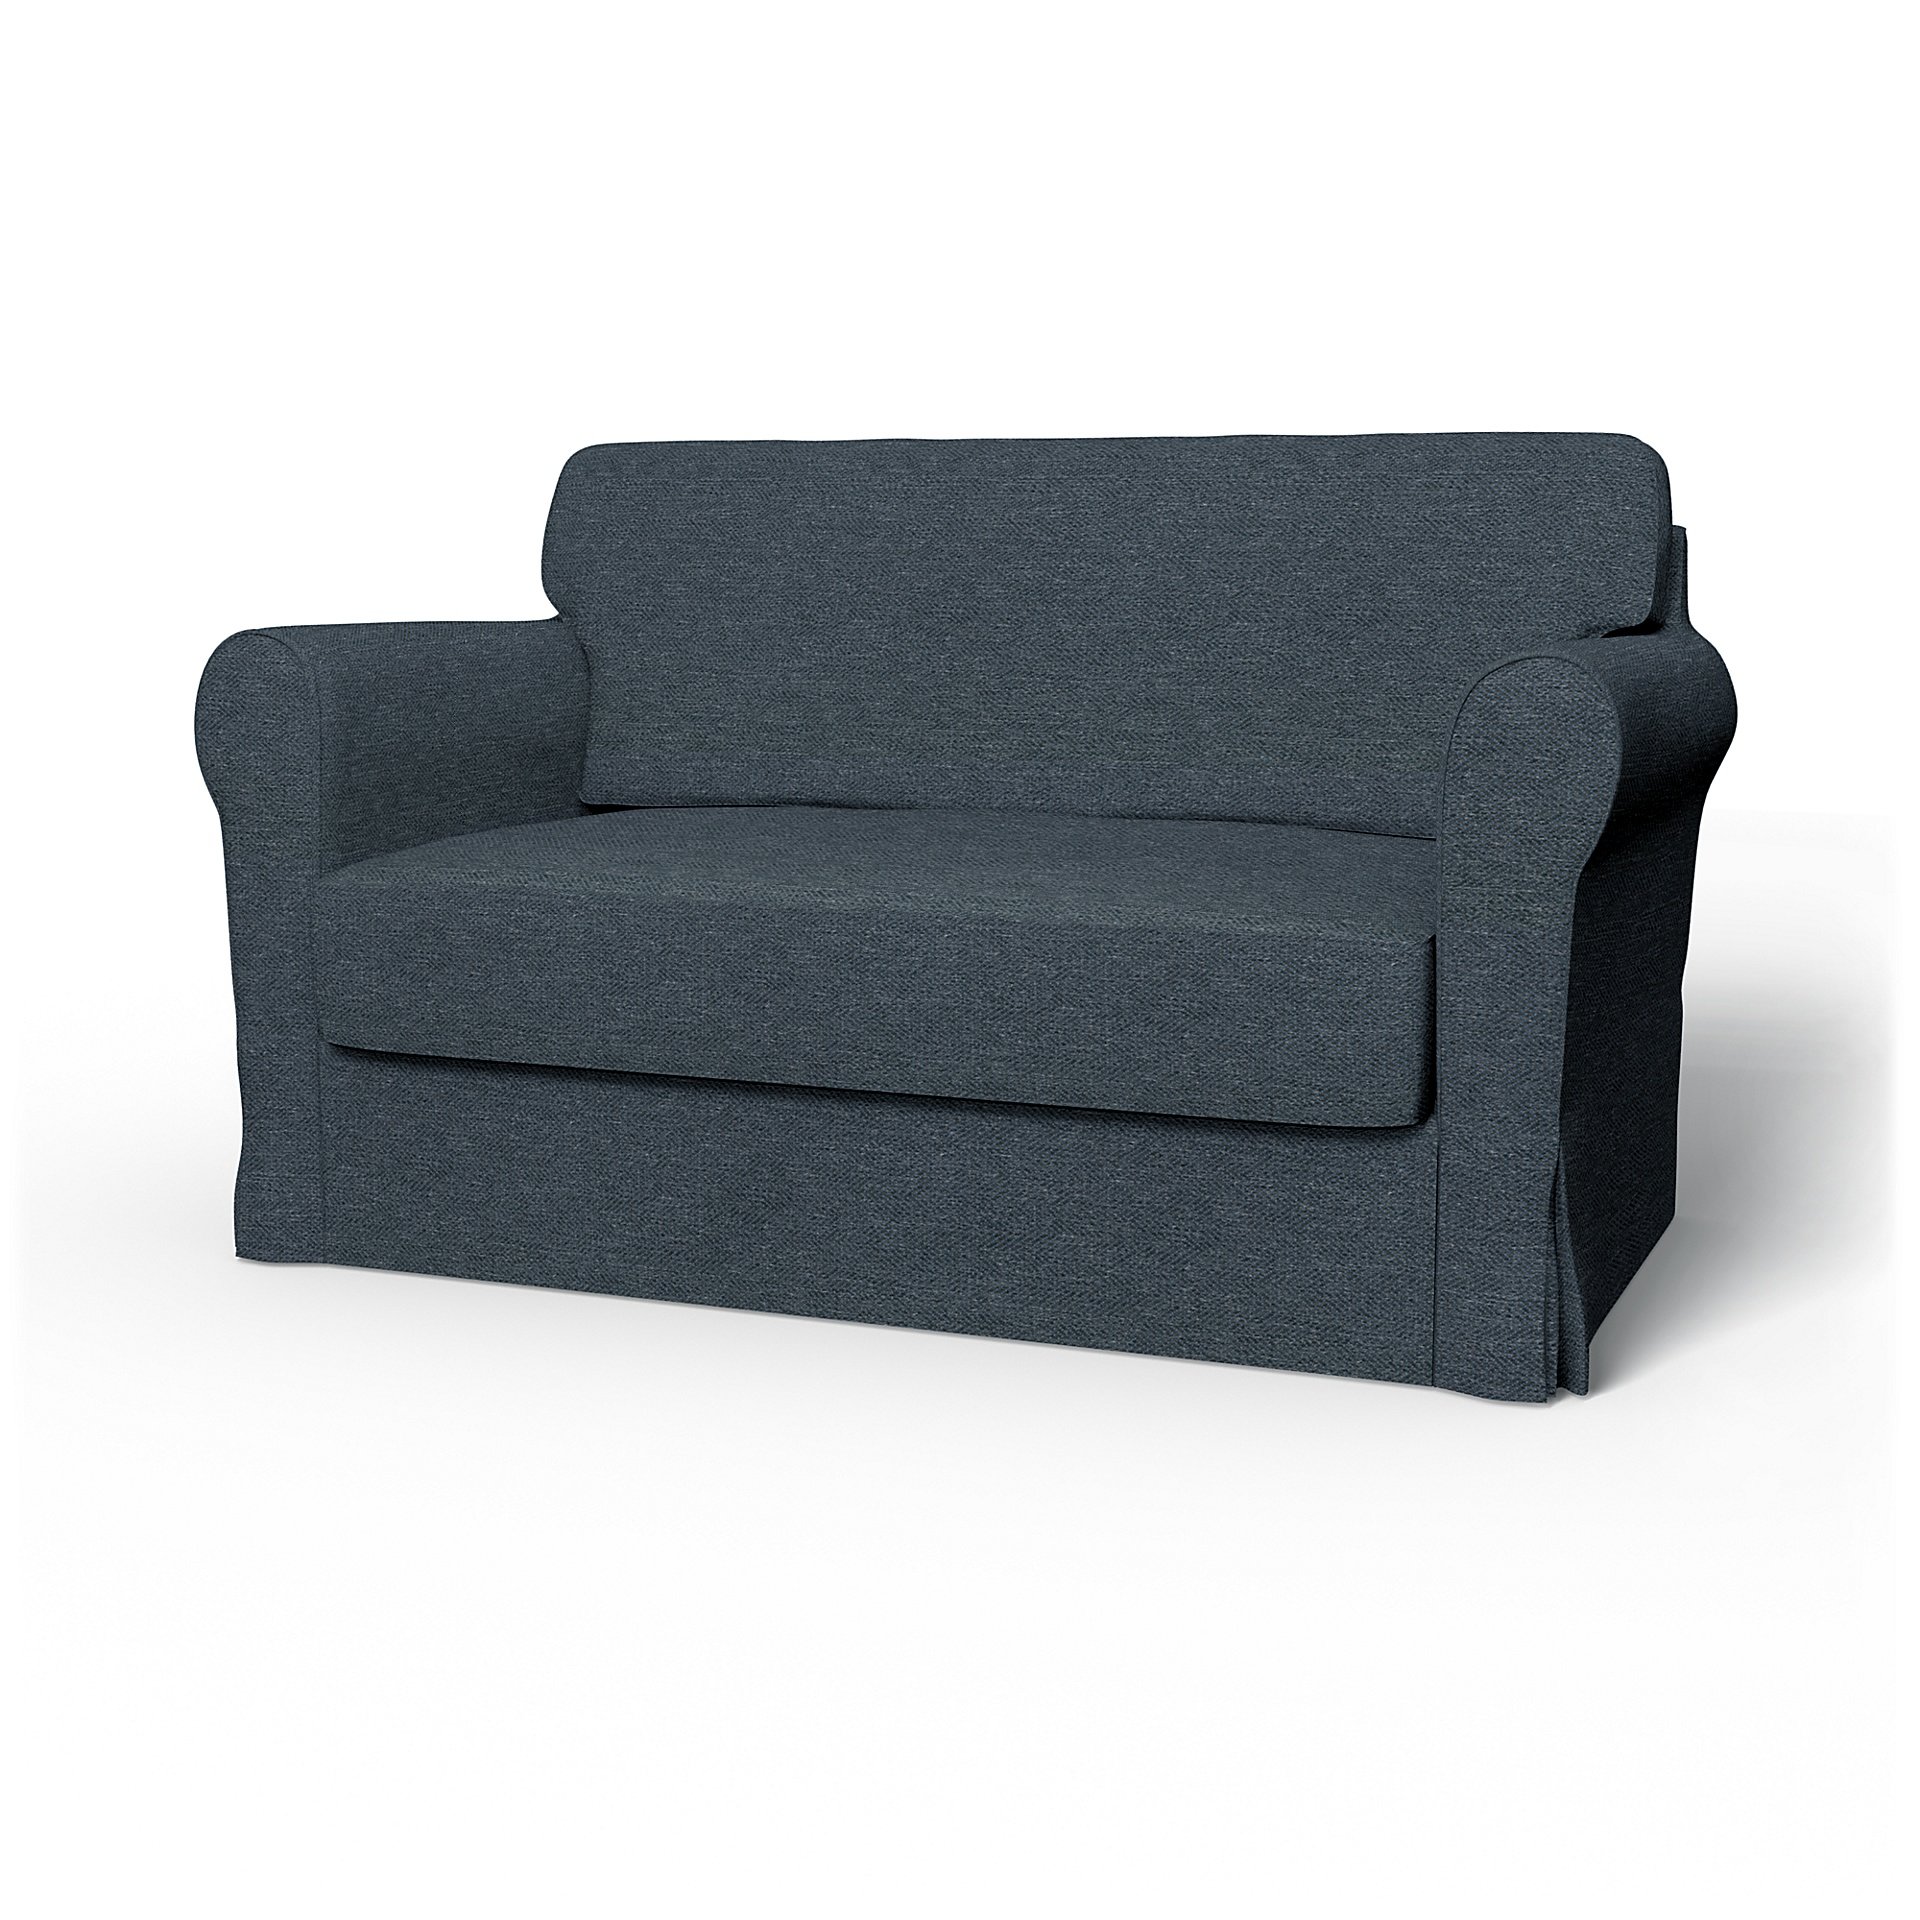 Sofa covers for discontinued IKEA Hagalund sofa beds - Bemz | Bemz